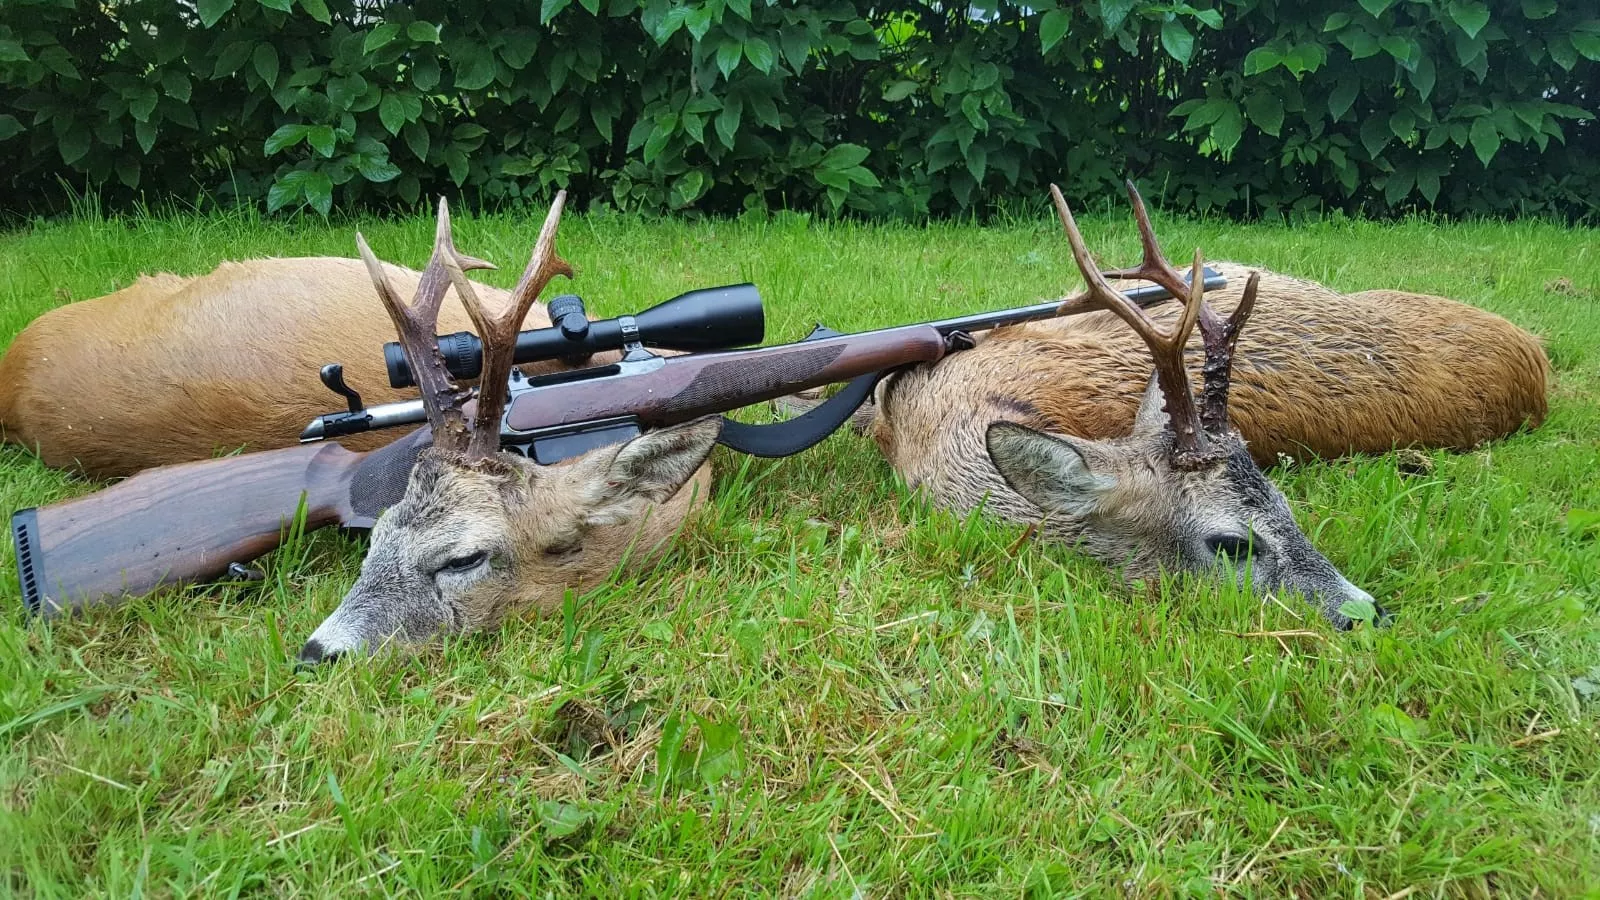 Tartu Jahindusklubi in Estonia, Europe | Hunting - Rated 1